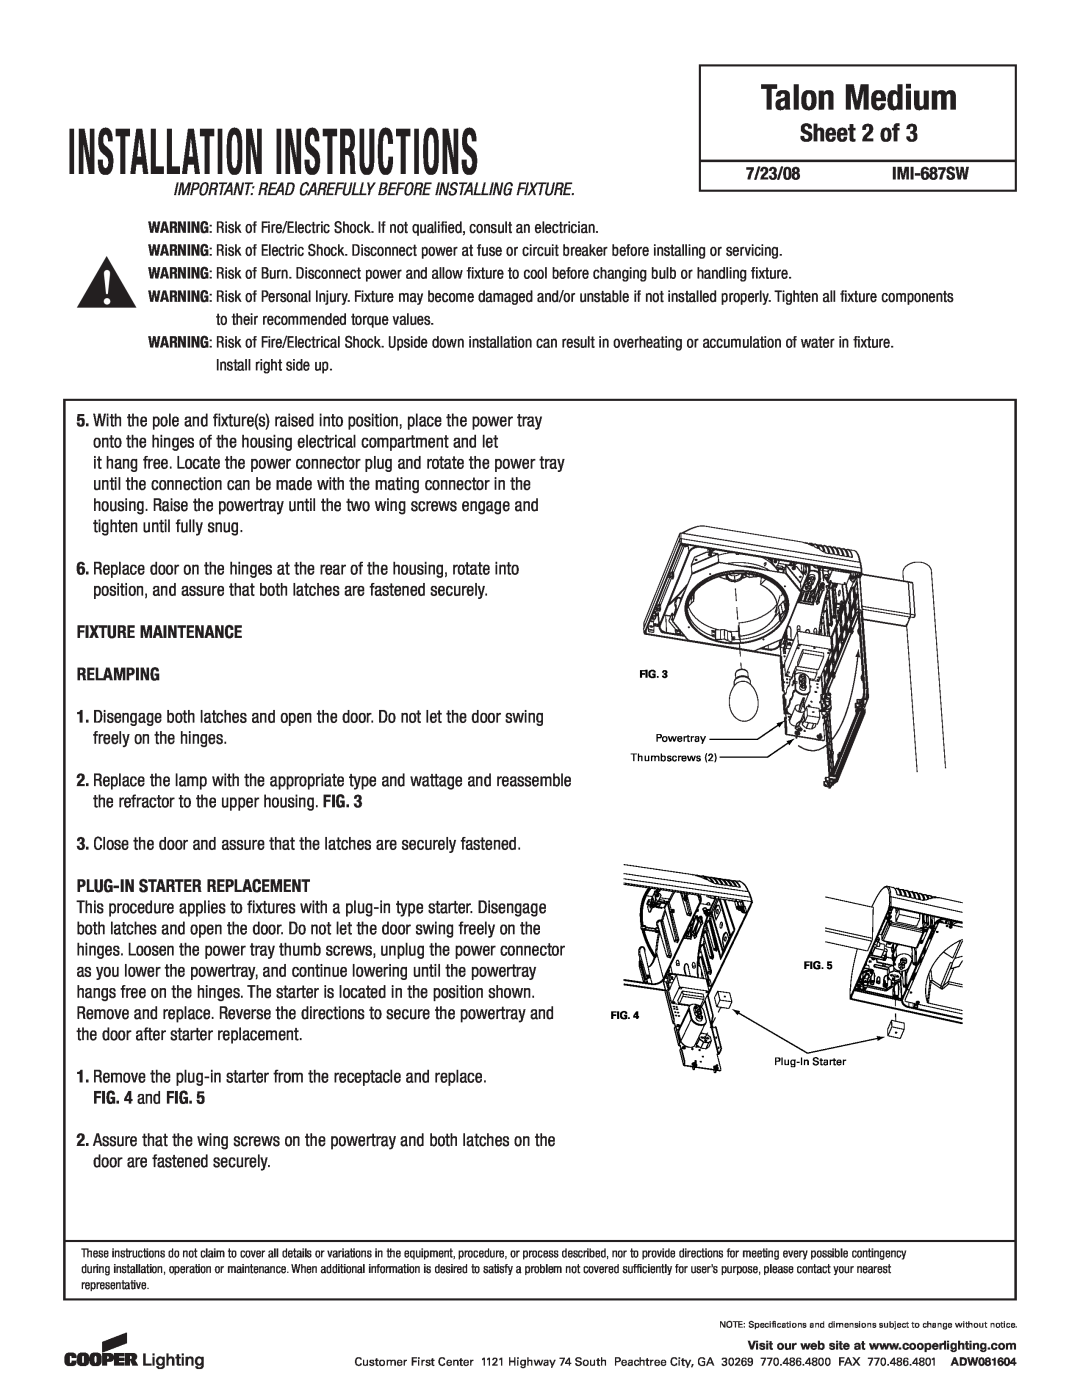 Cooper Lighting TMU/TLU installation instructions Sheet 2 of, Installation Instructions, Talon Medium 